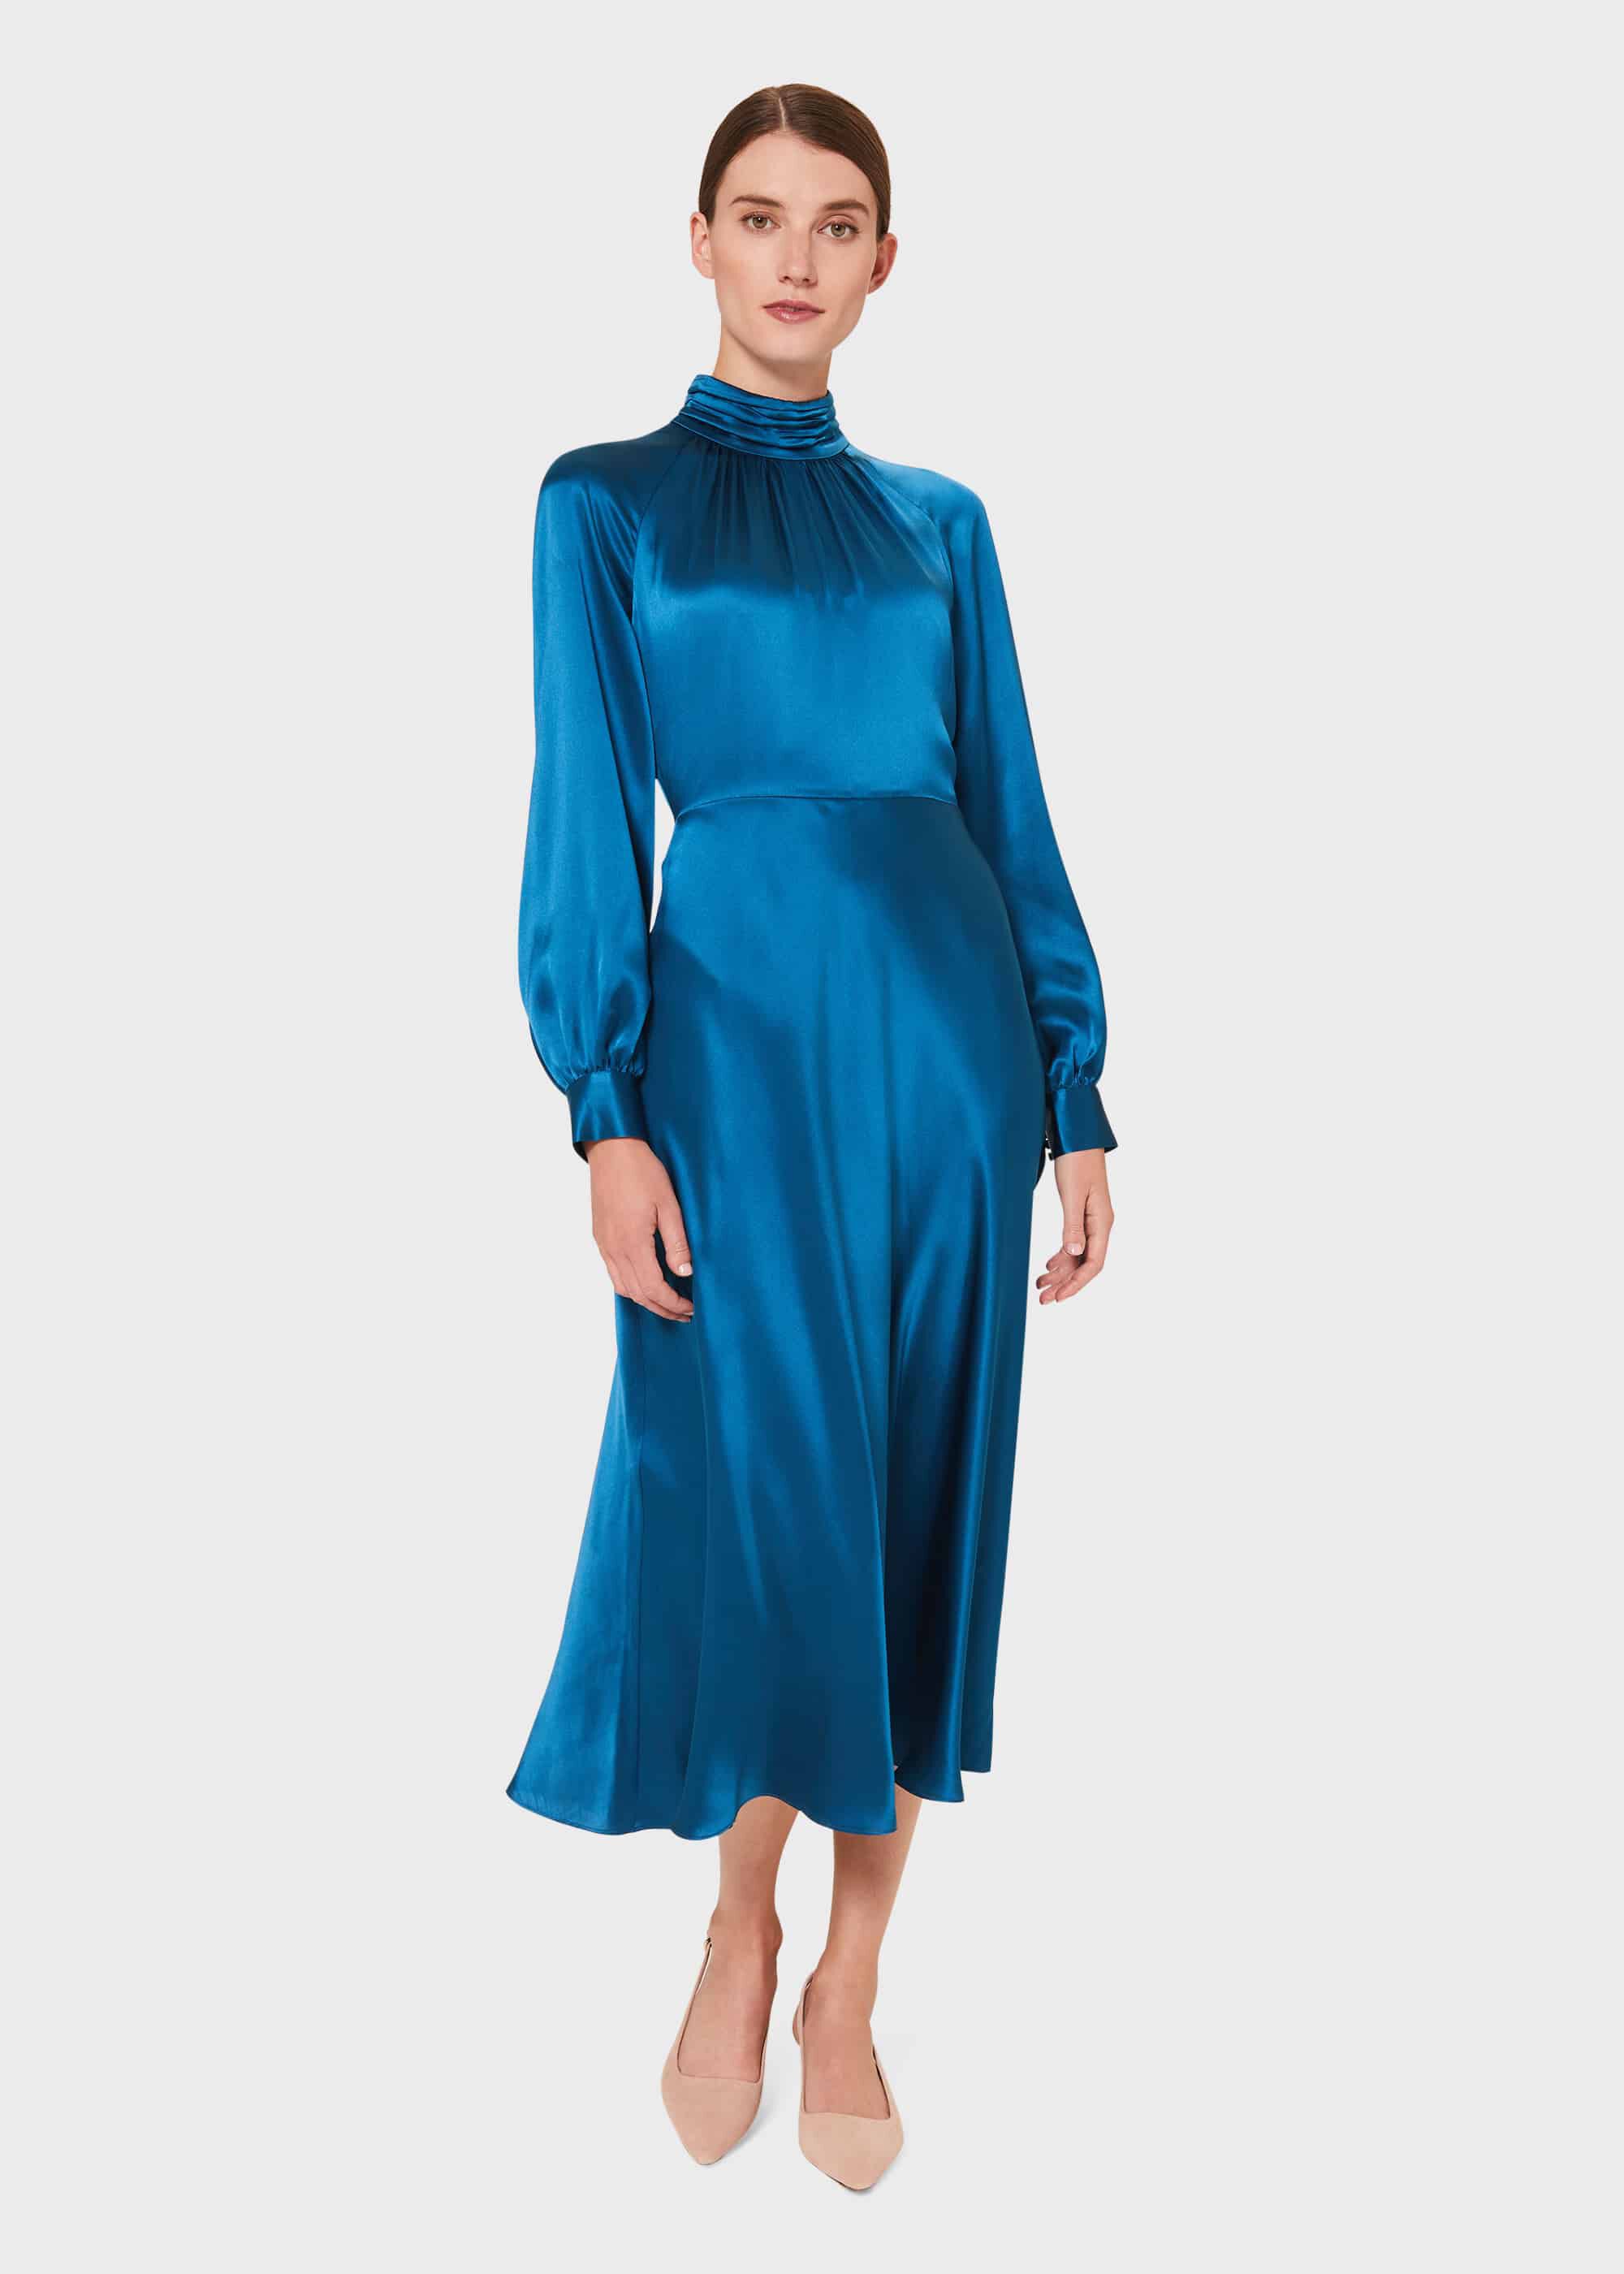 hobbs turquoise dress